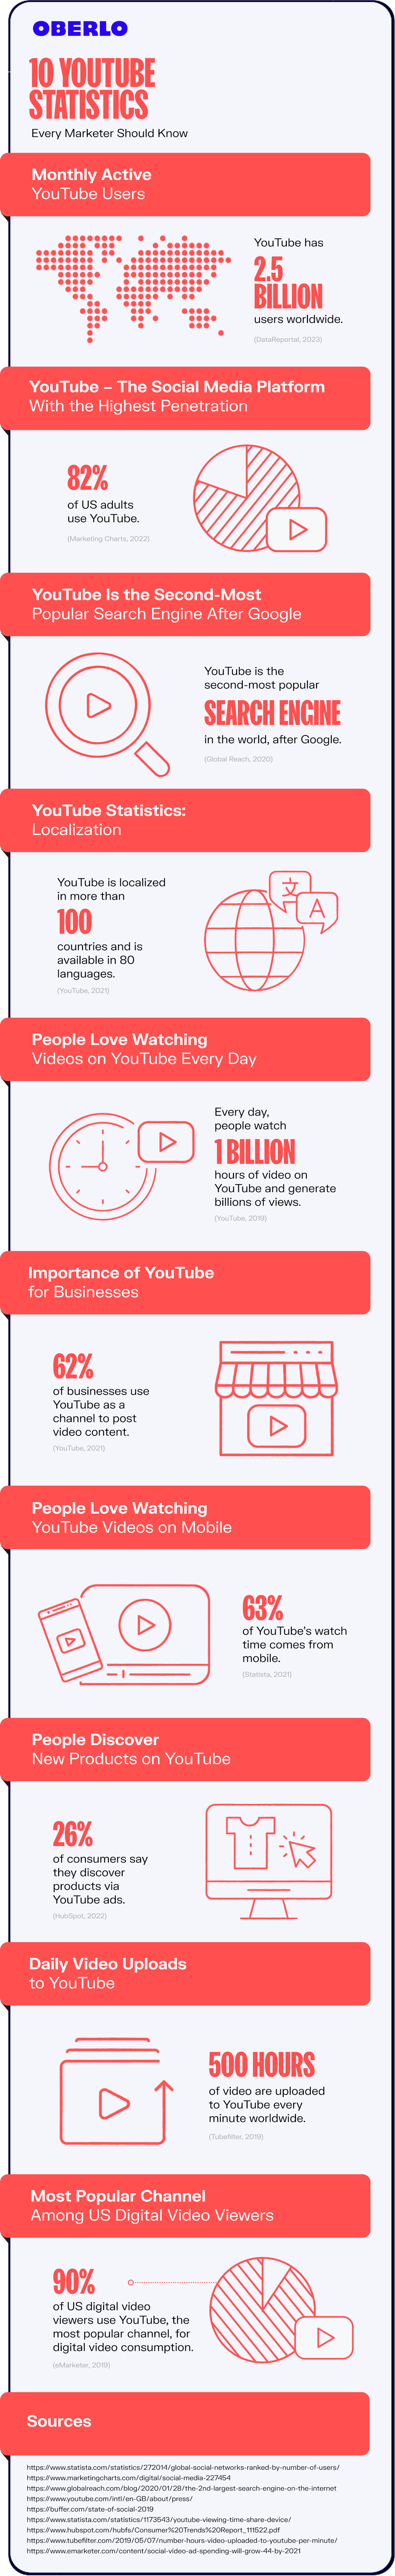 youtube statistics full graphic